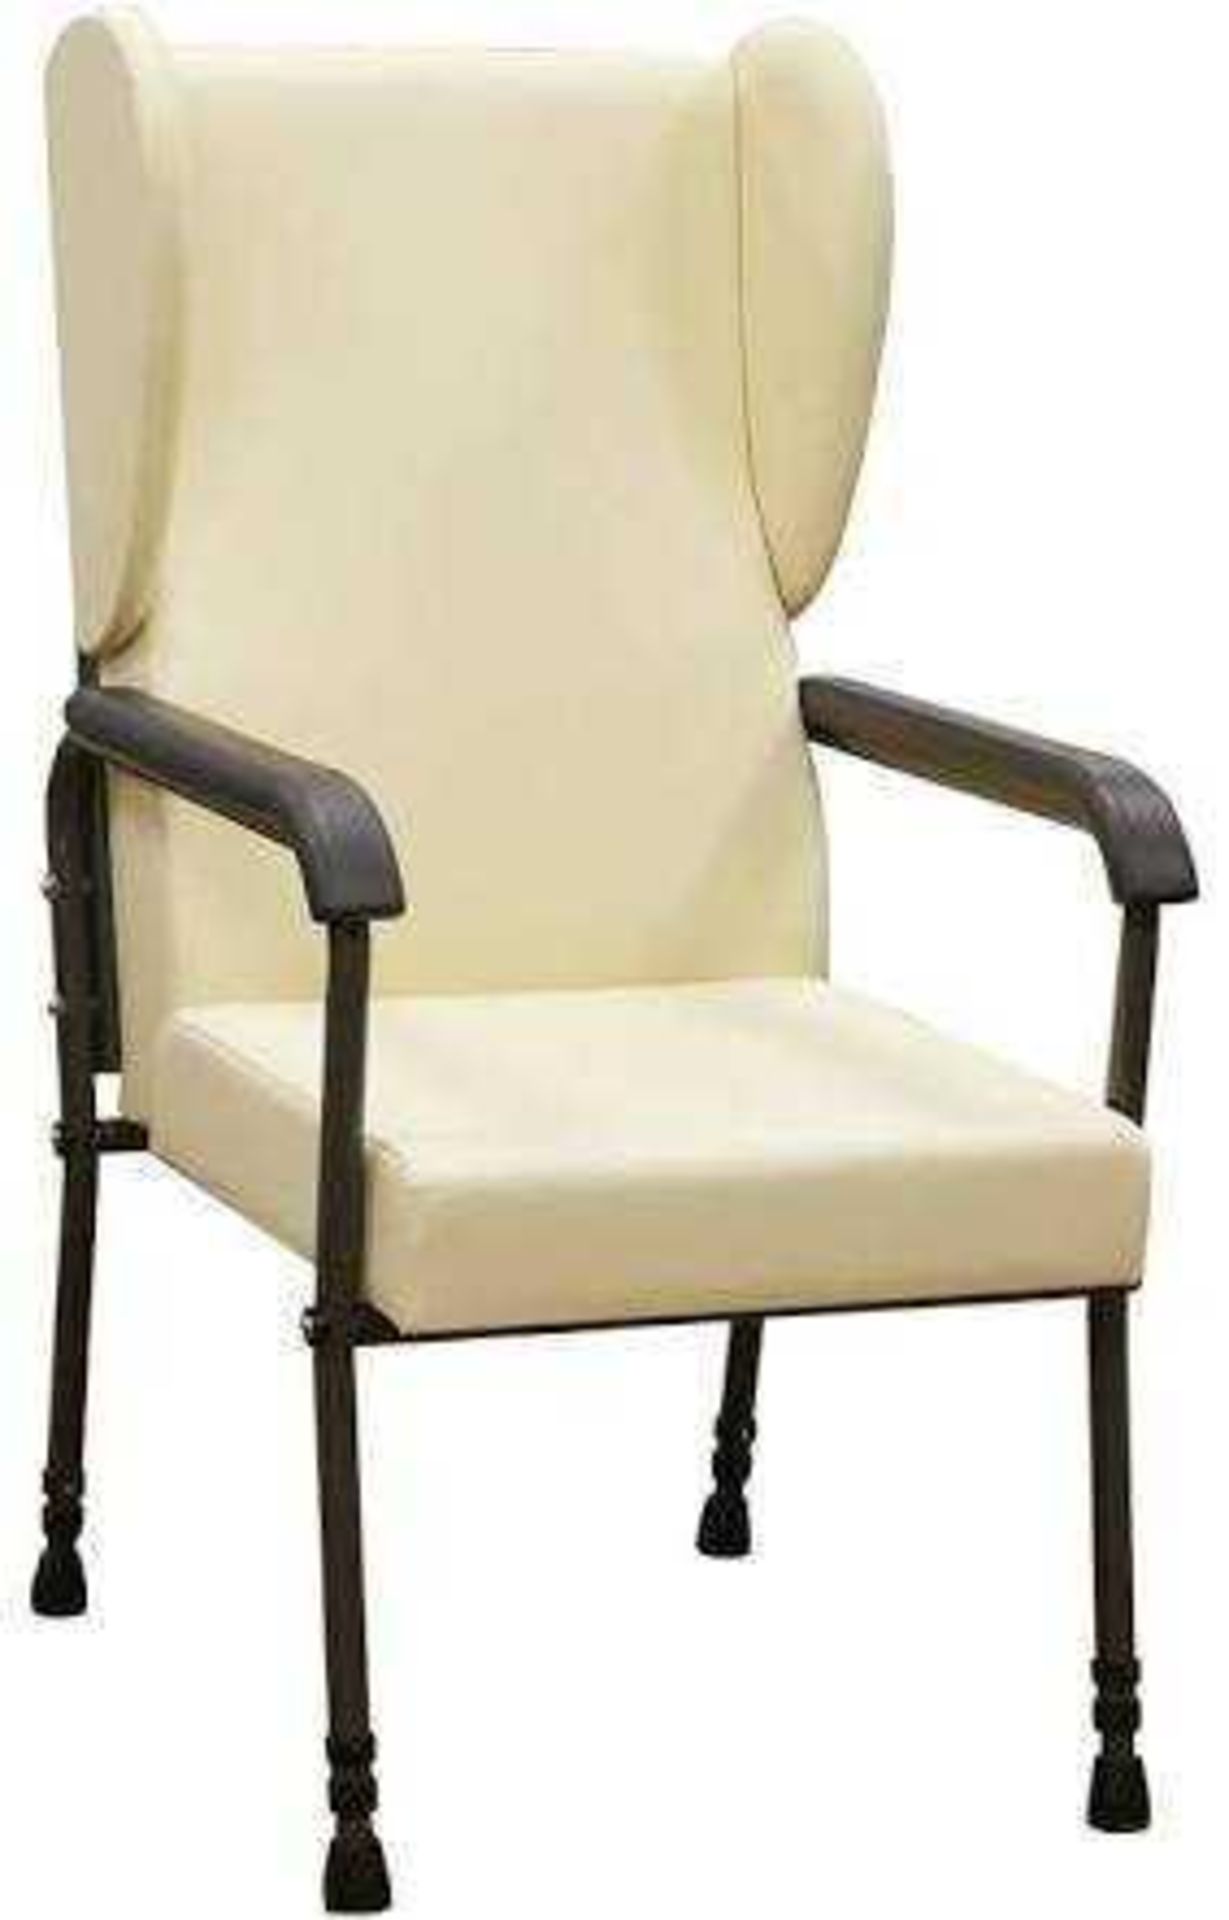 RRP £500 Aidapt Chair In Cream Wipe It Clean